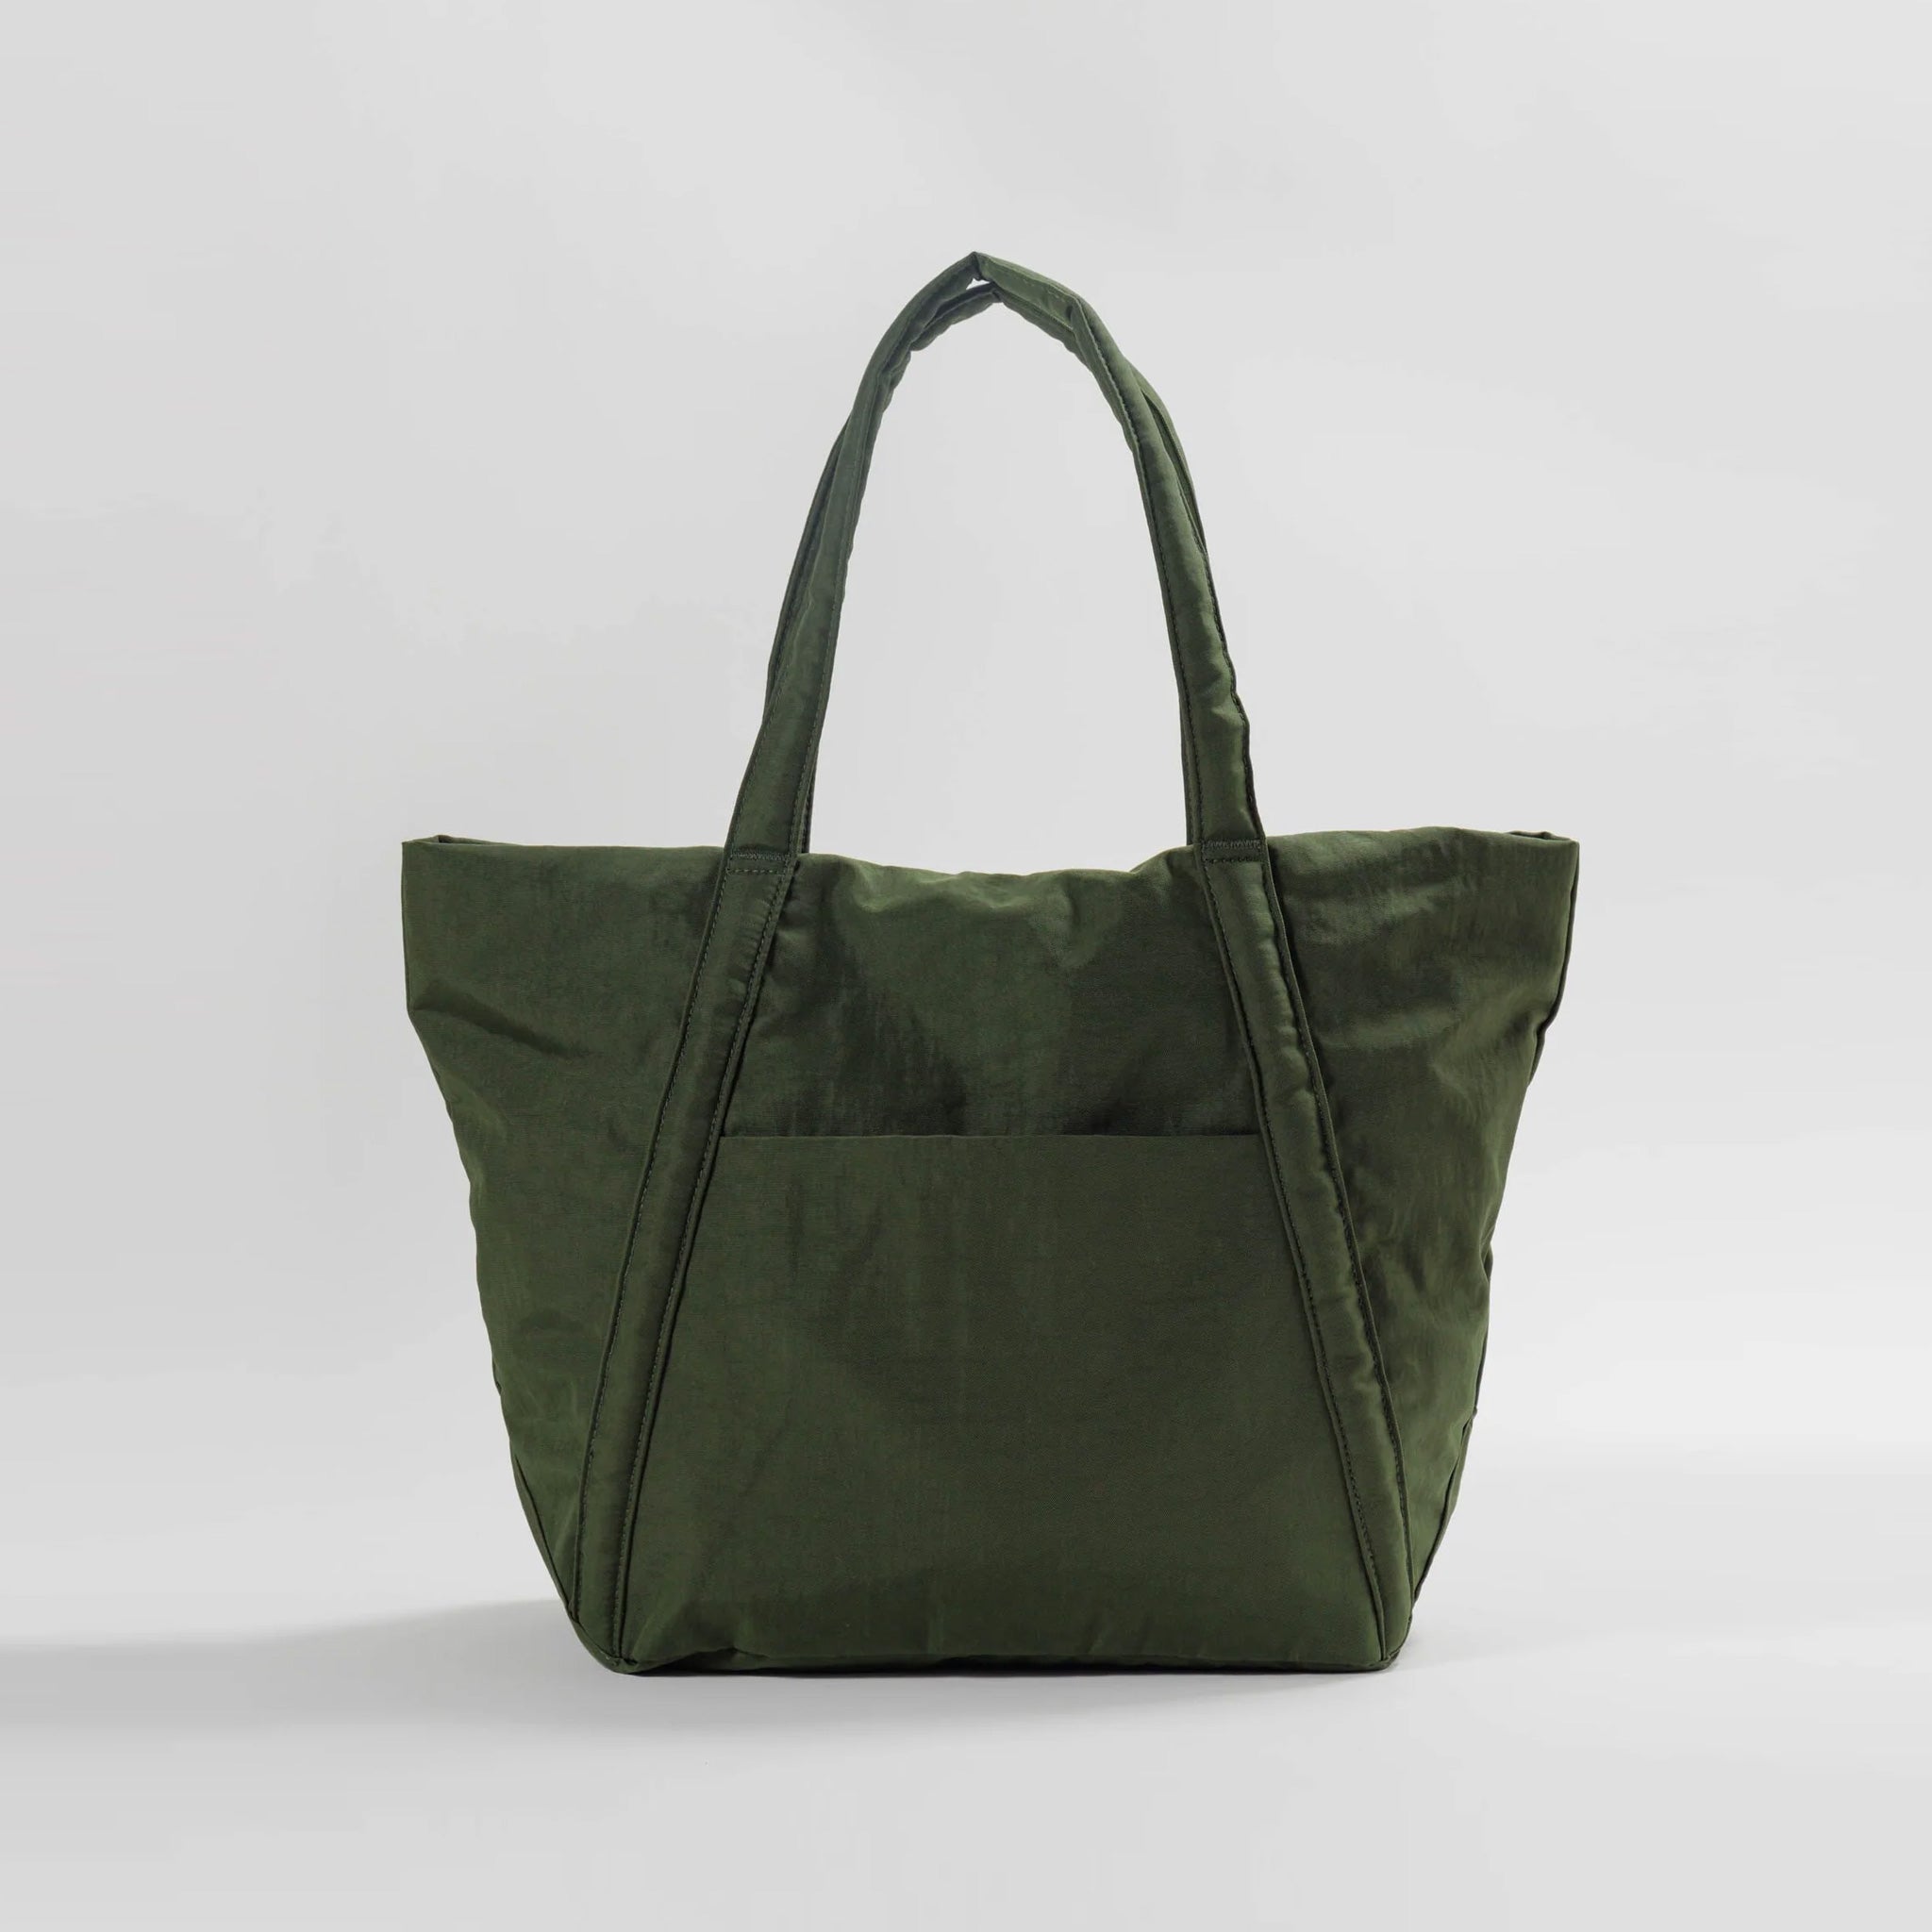 Baggu's puffy Cloud nylon bag in a trapezoidal shape and dark green colorway.